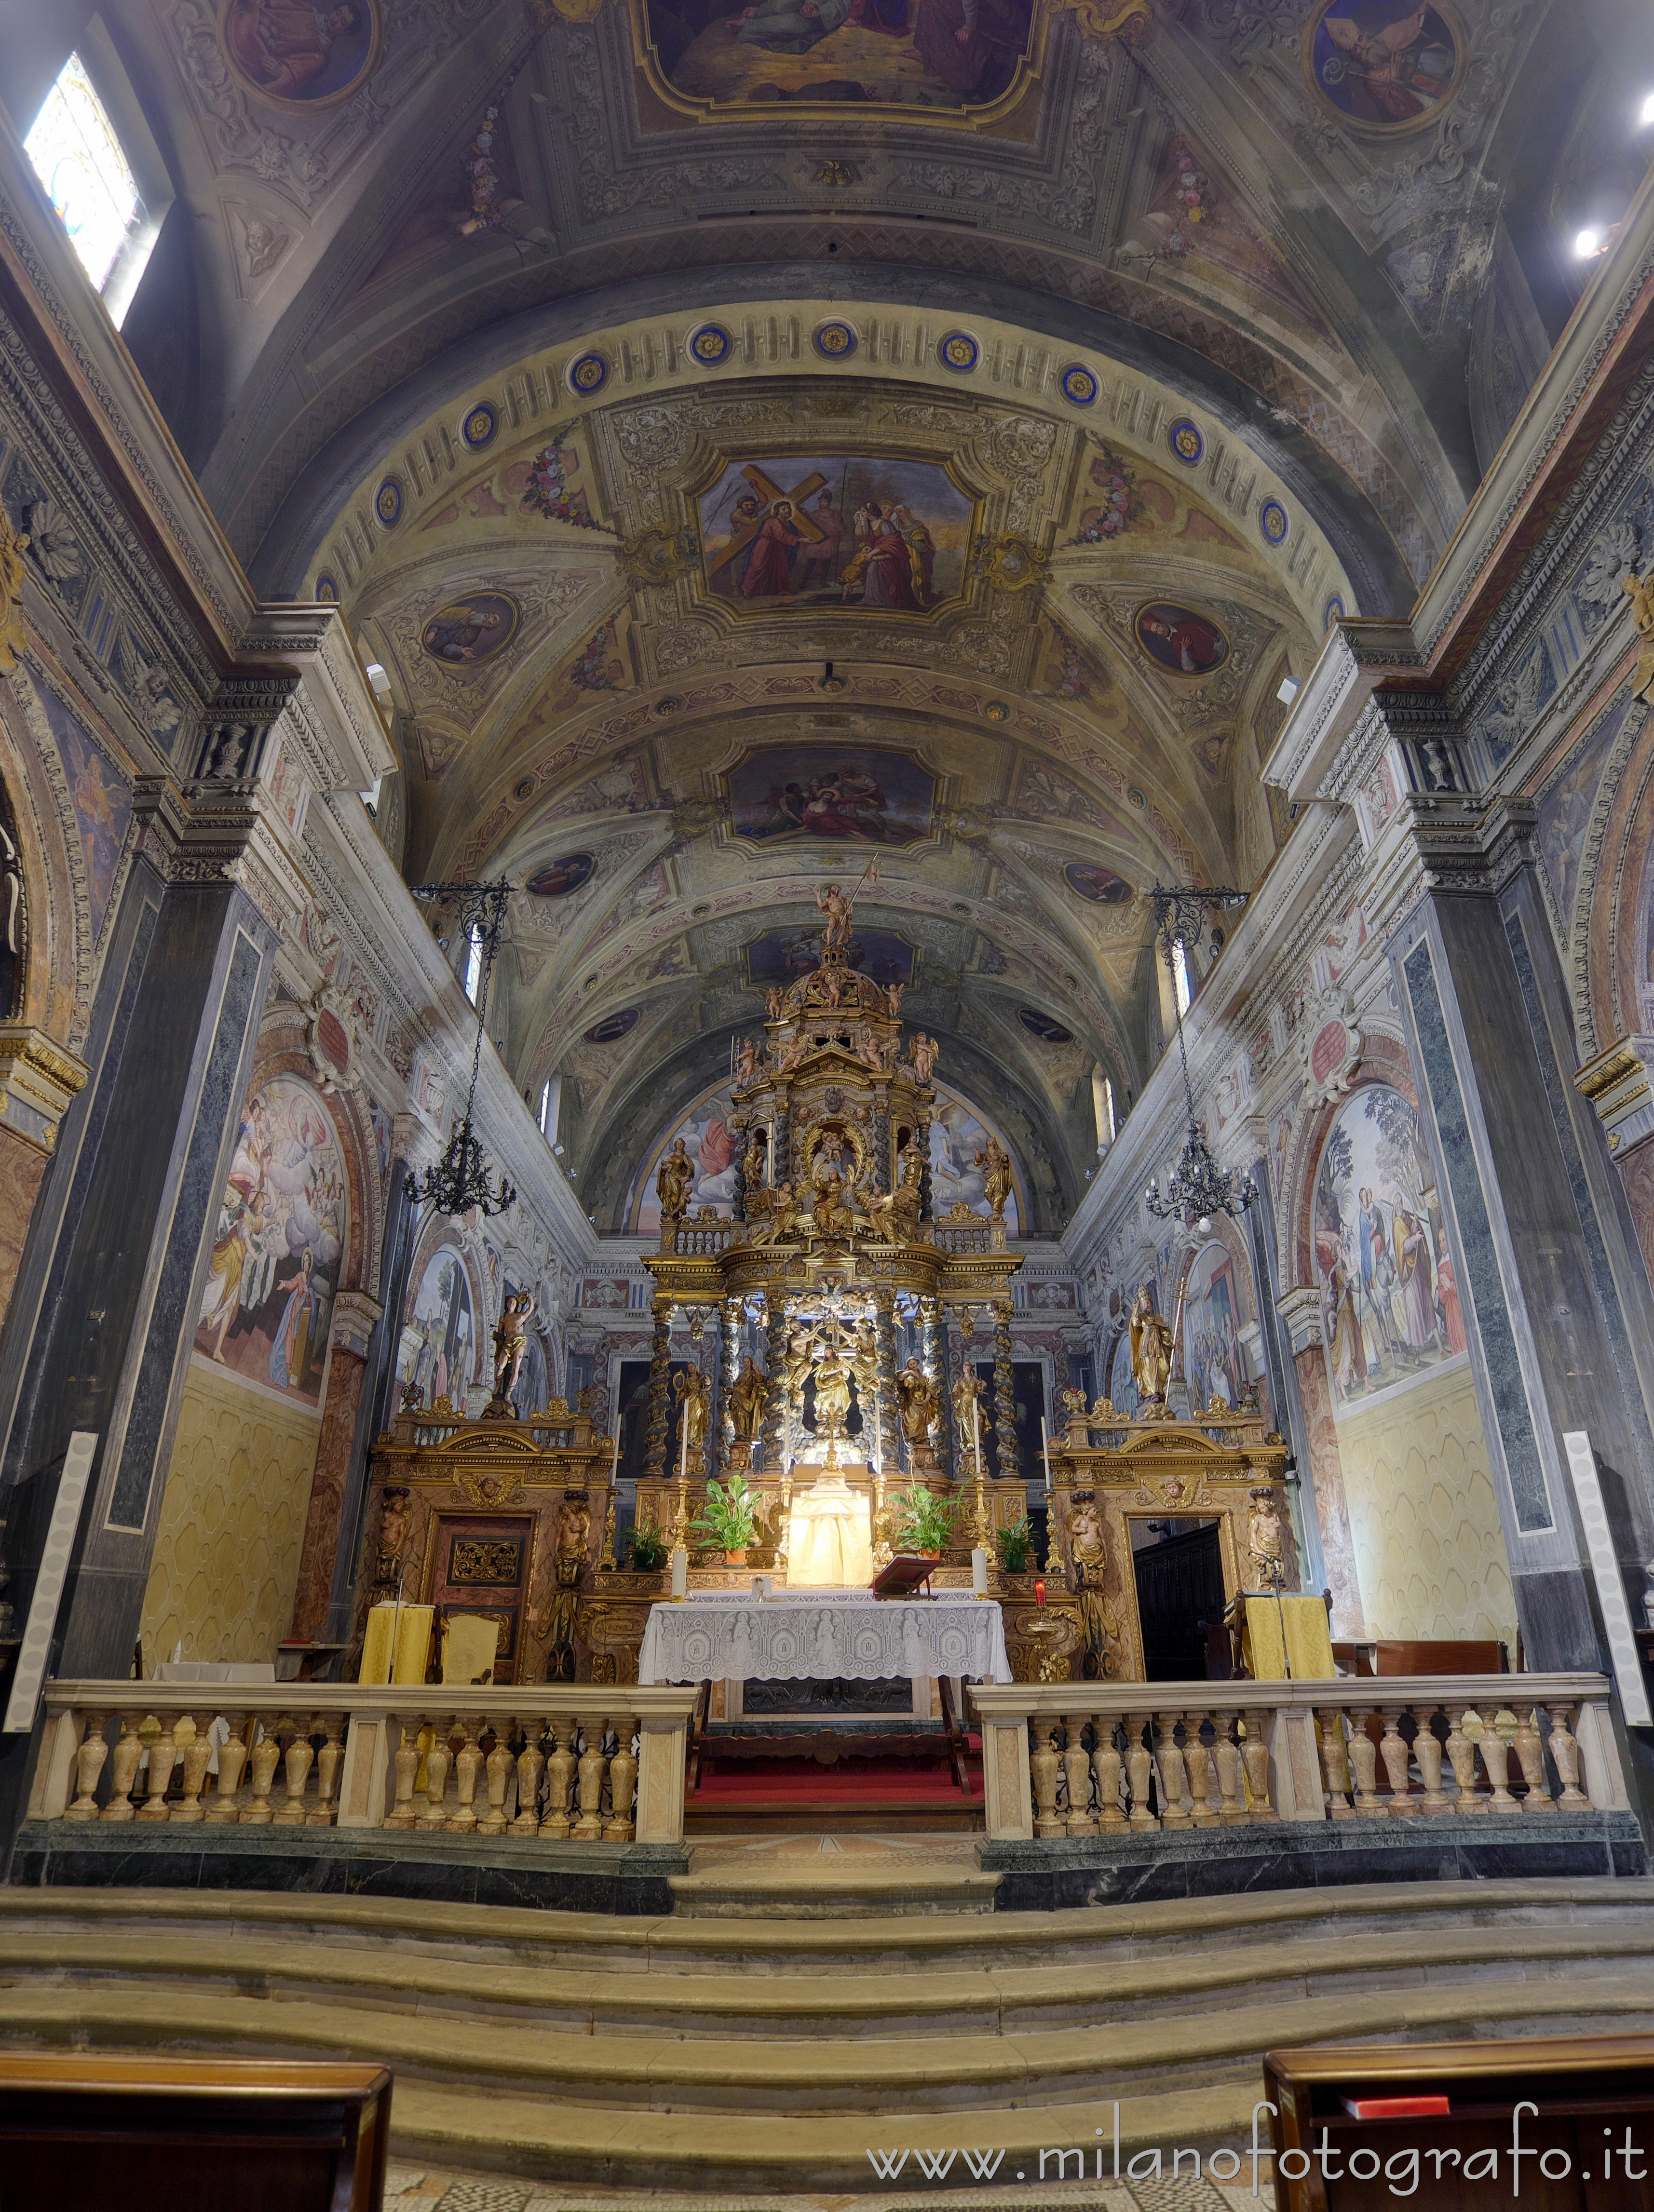 Biella (Italy): Presbytery and choir of the Church of the Holy Trinity - Biella (Italy)